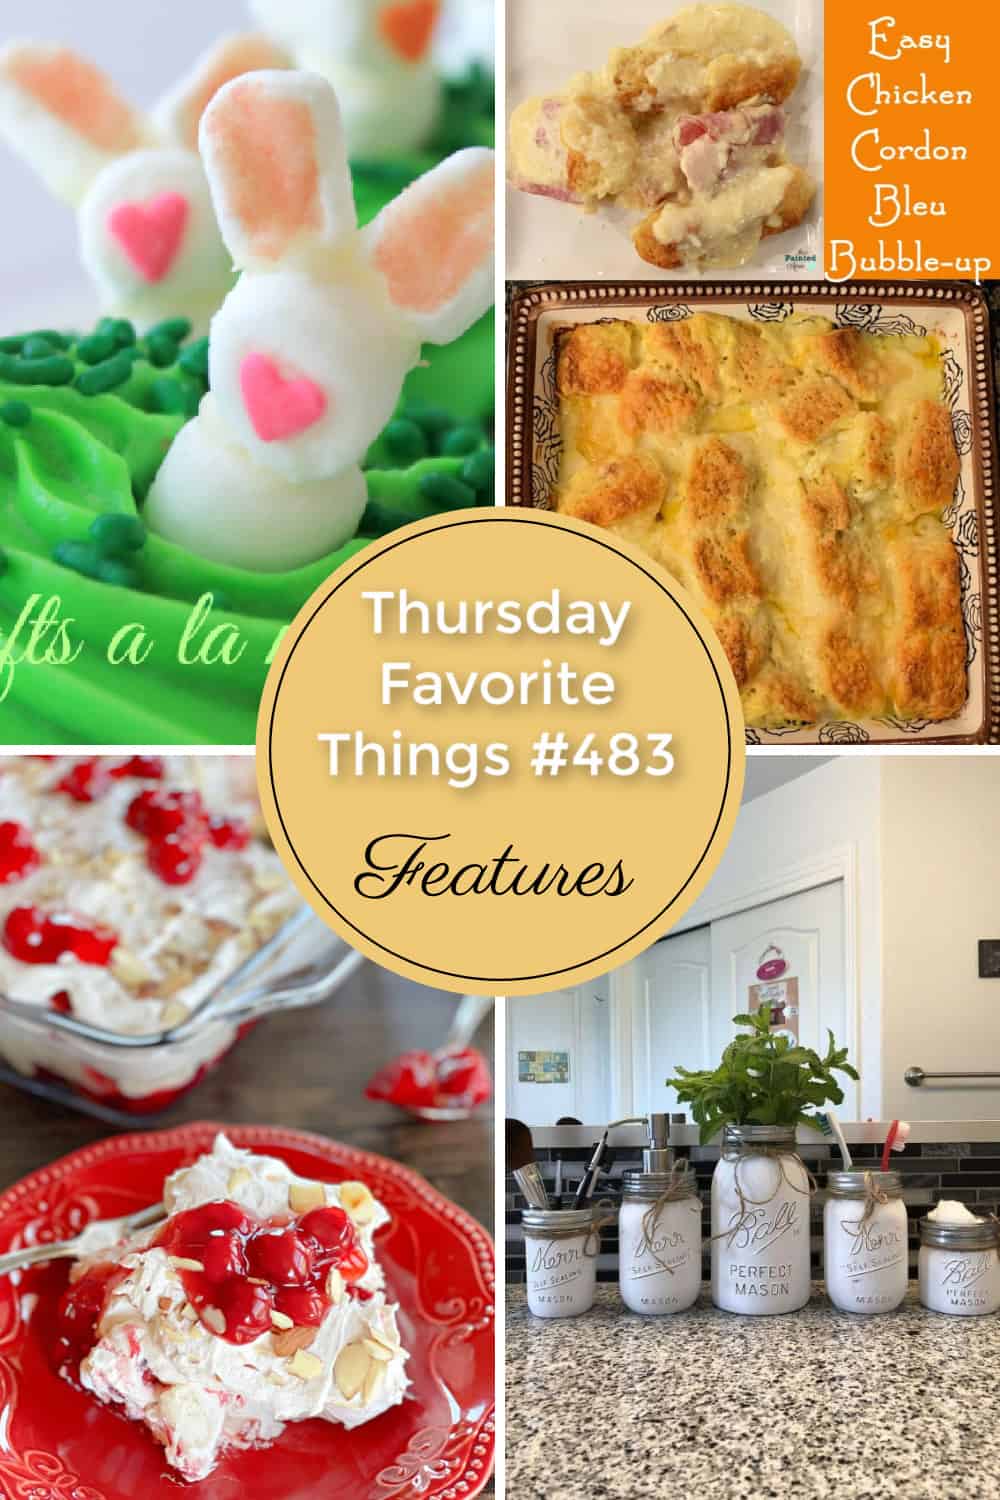 Thursday Favorite Things #483